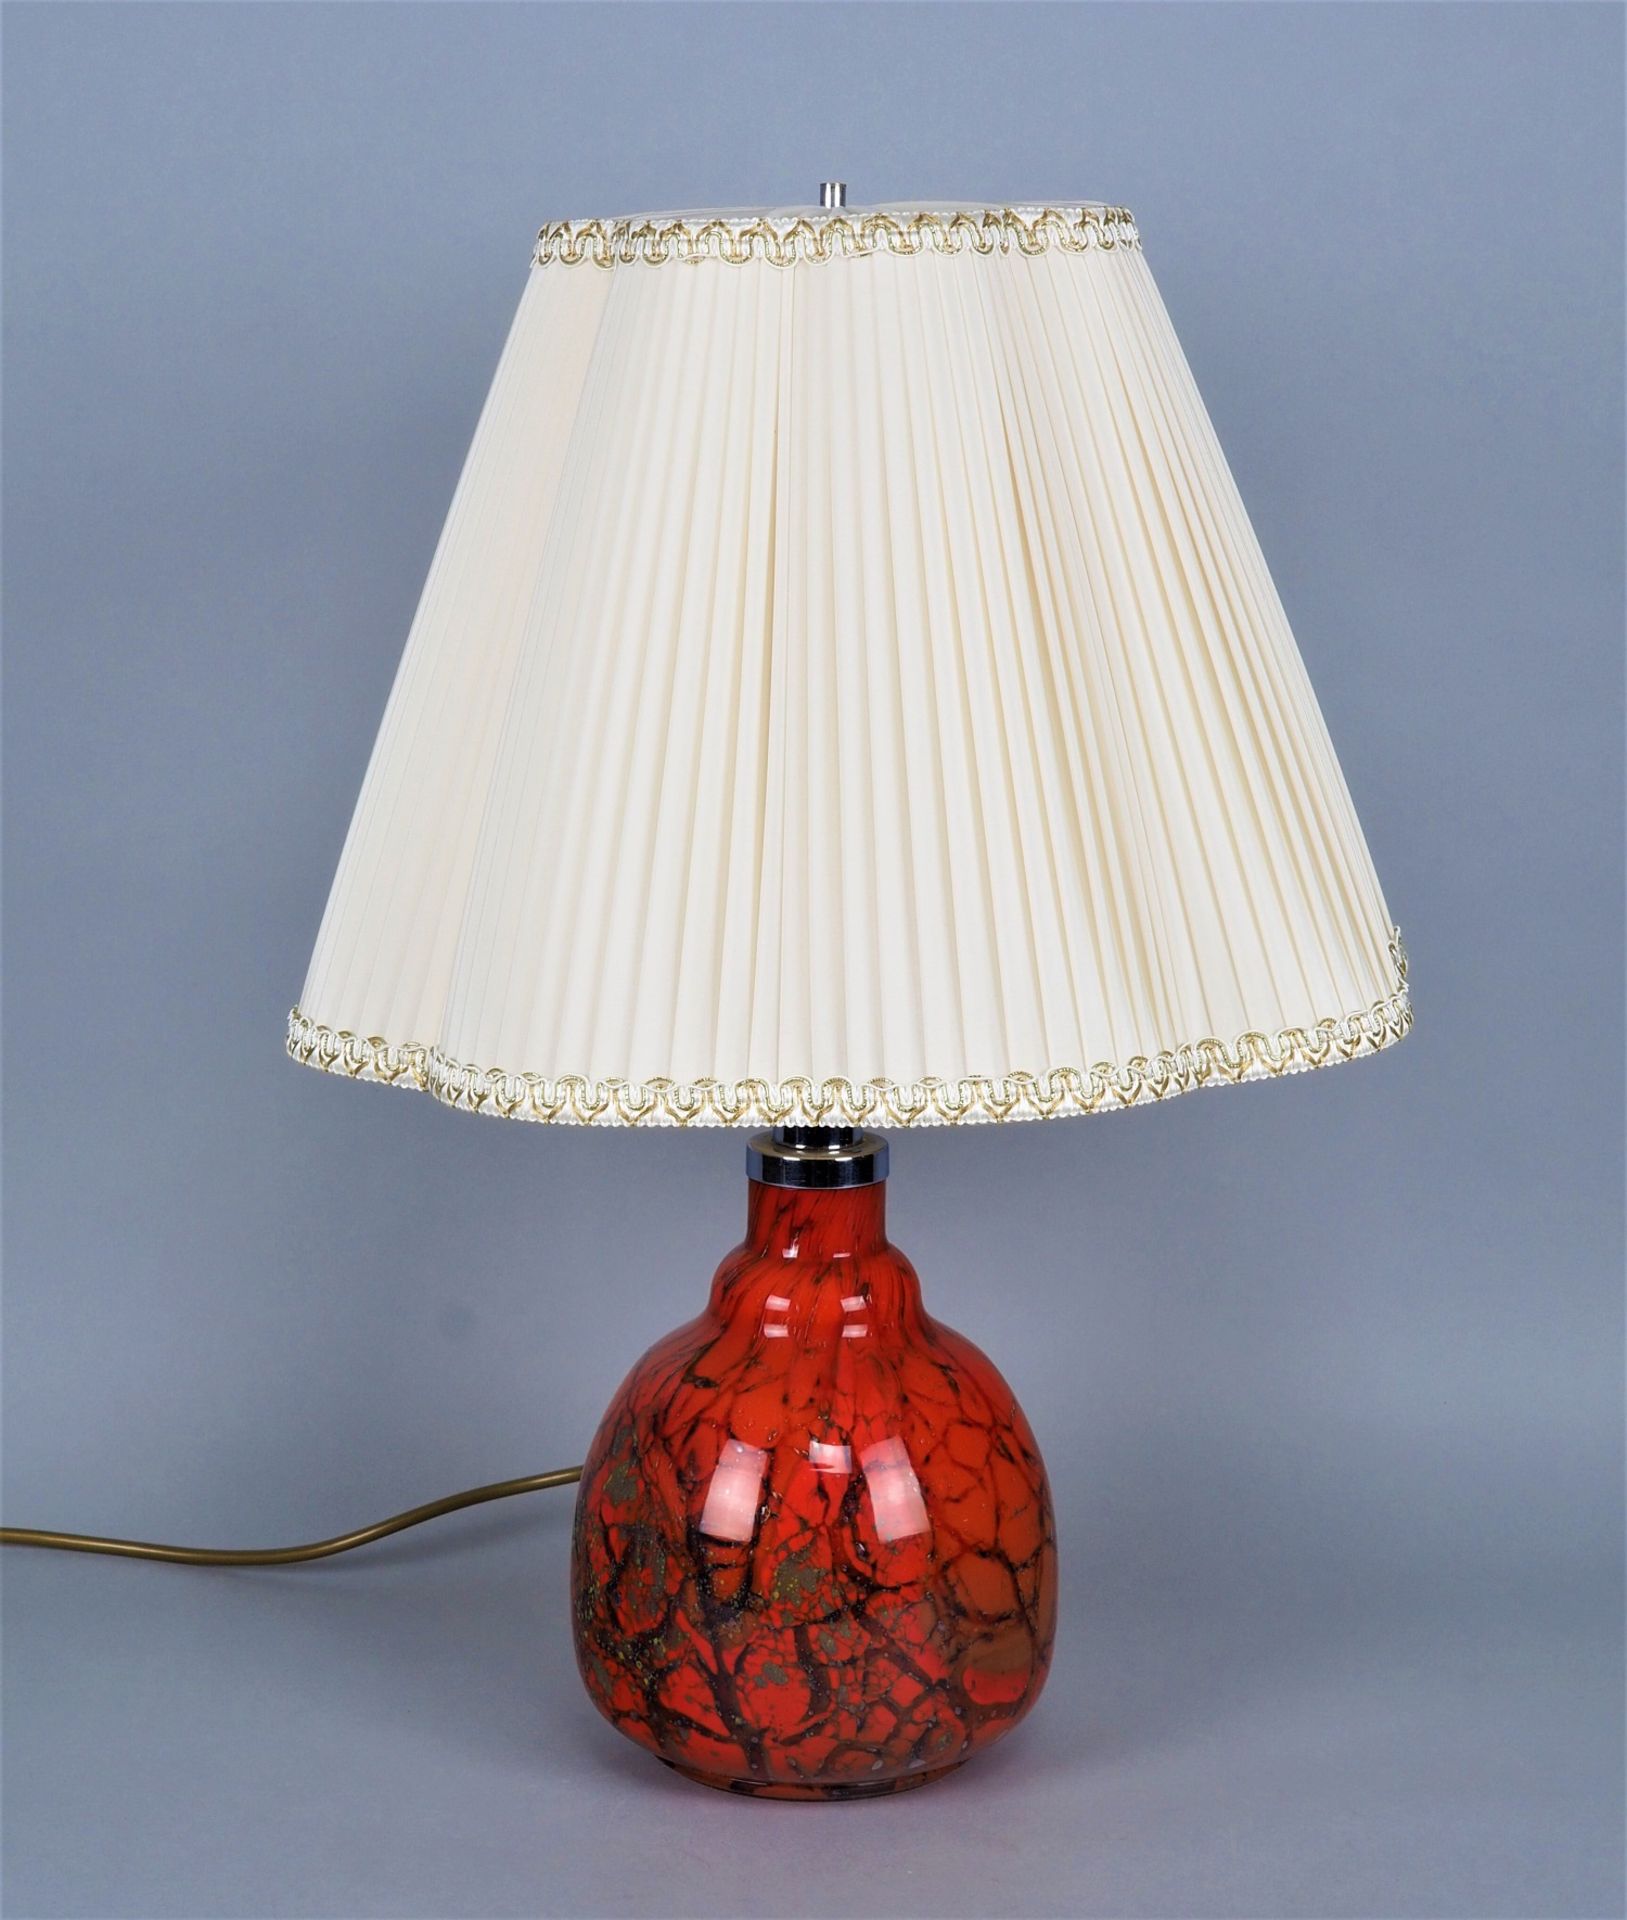 WMF Ikora lamp 50s - Image 2 of 4